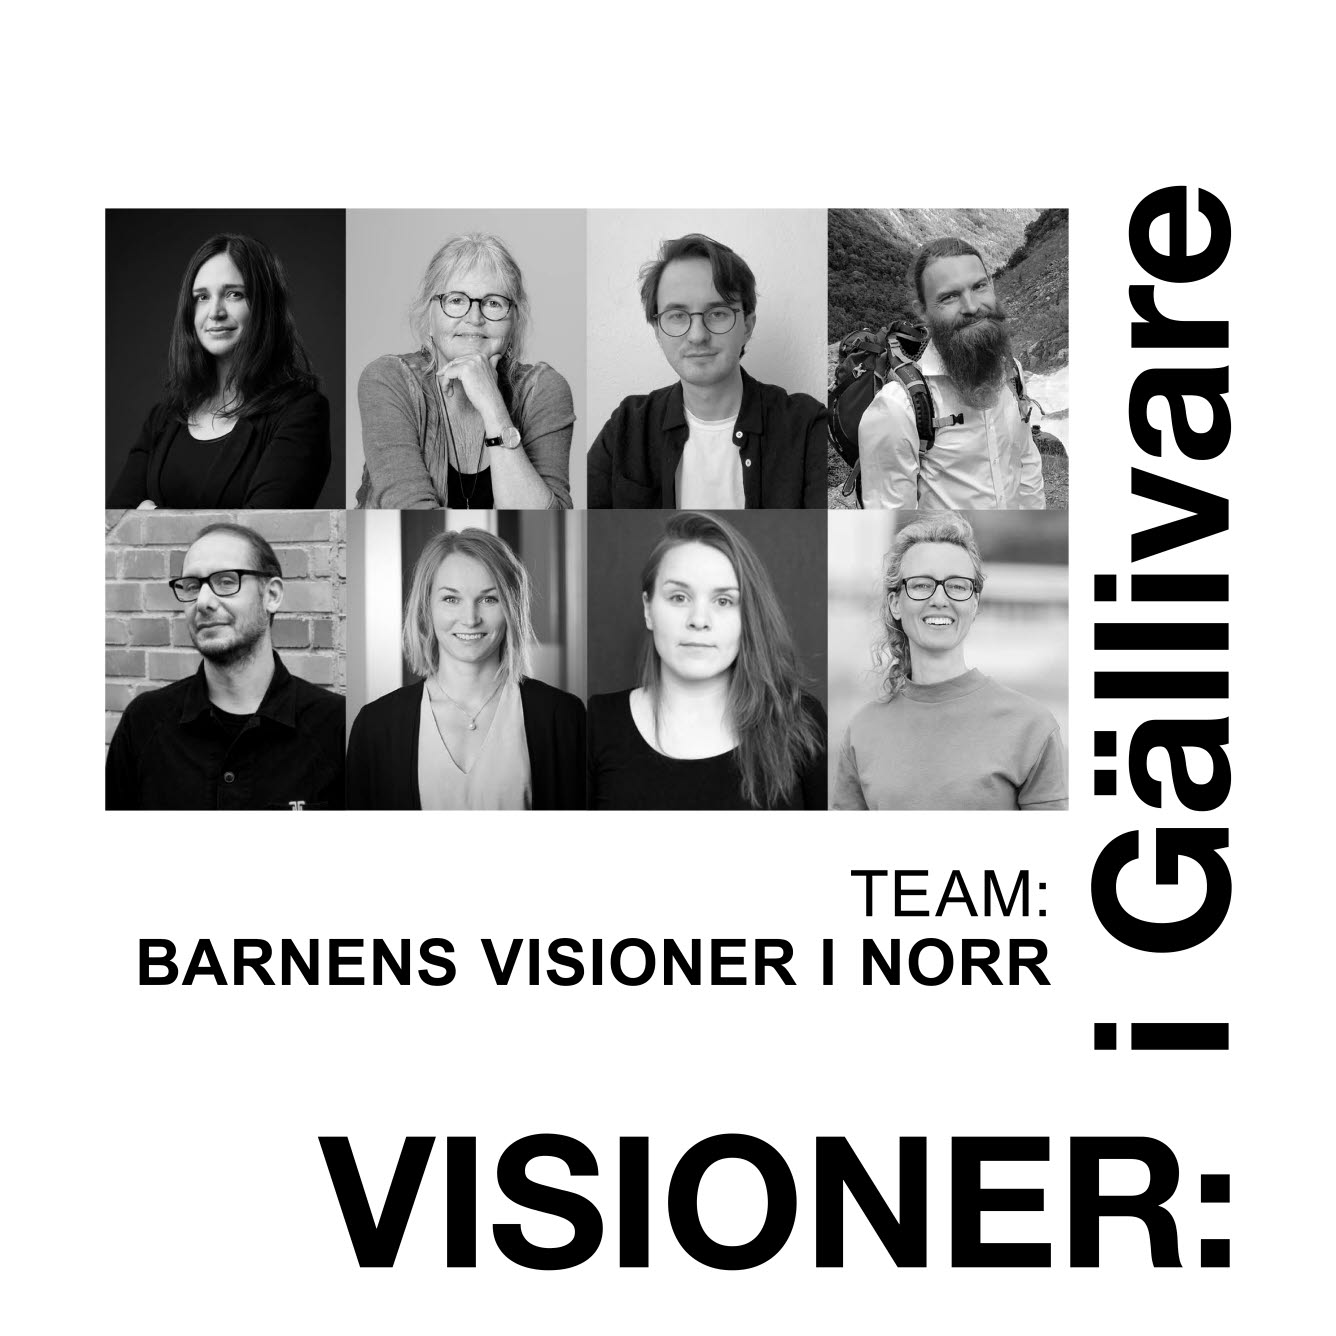 Team Barnens visioner i norr bestående av åtta personer.